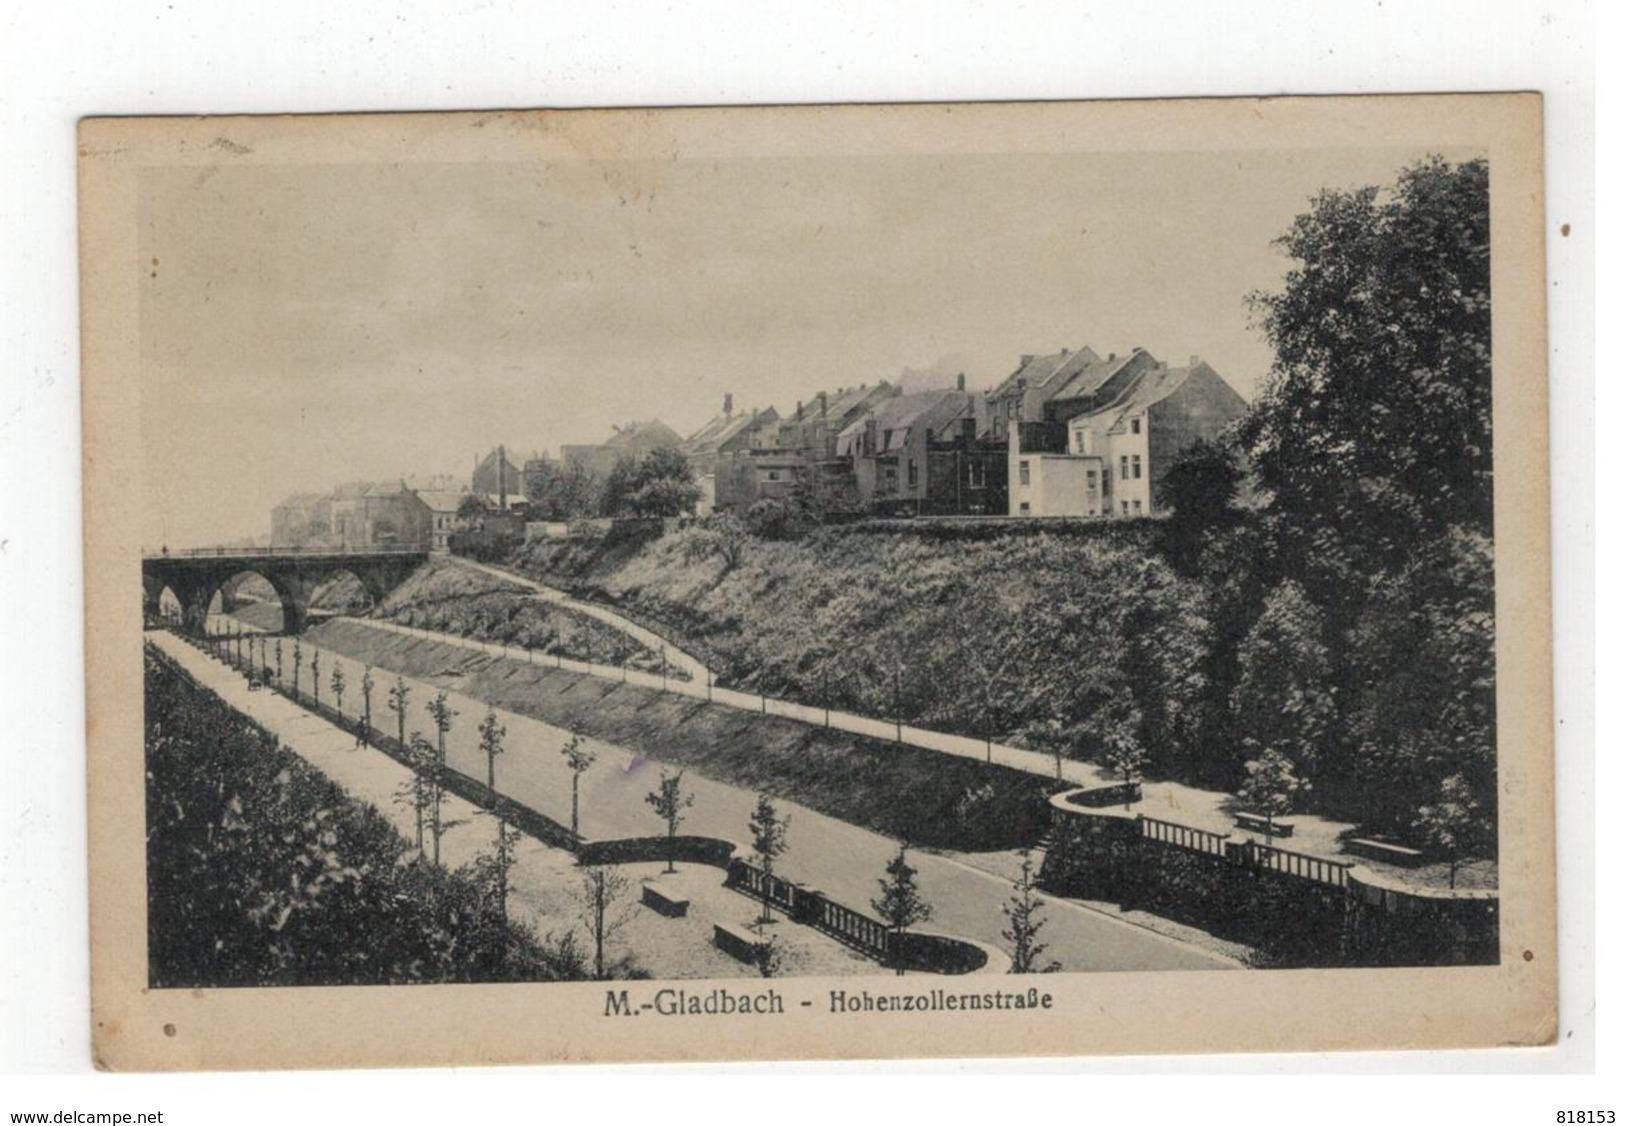 M.-Gladbach - Hohenzollernstrase 1921 - Mönchengladbach